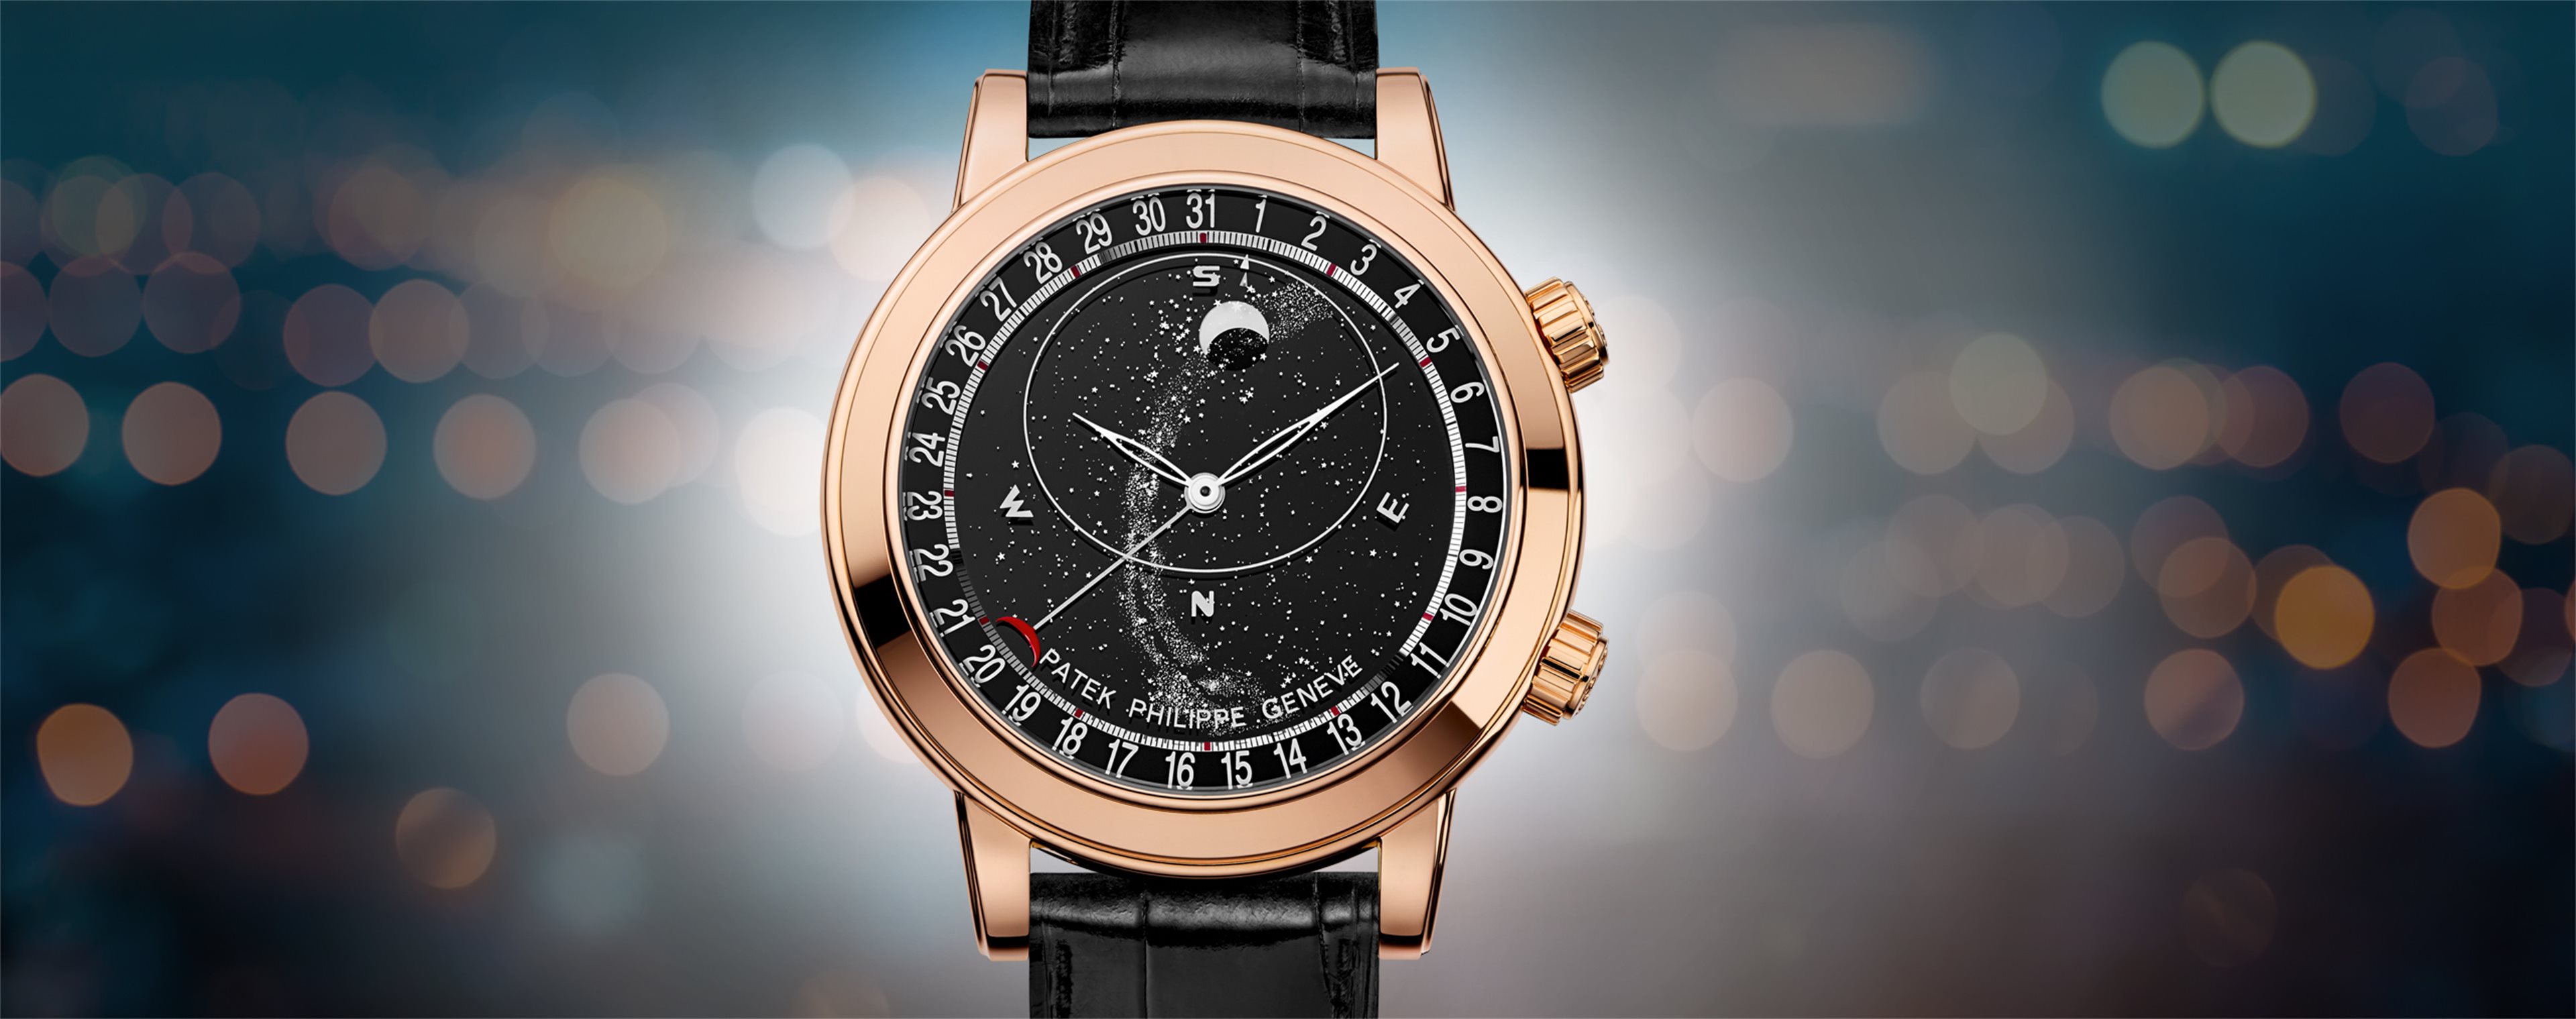 Patek Philippe Gondolo 18K White Gold and Diamonds Men's Watch Preowned-5112G